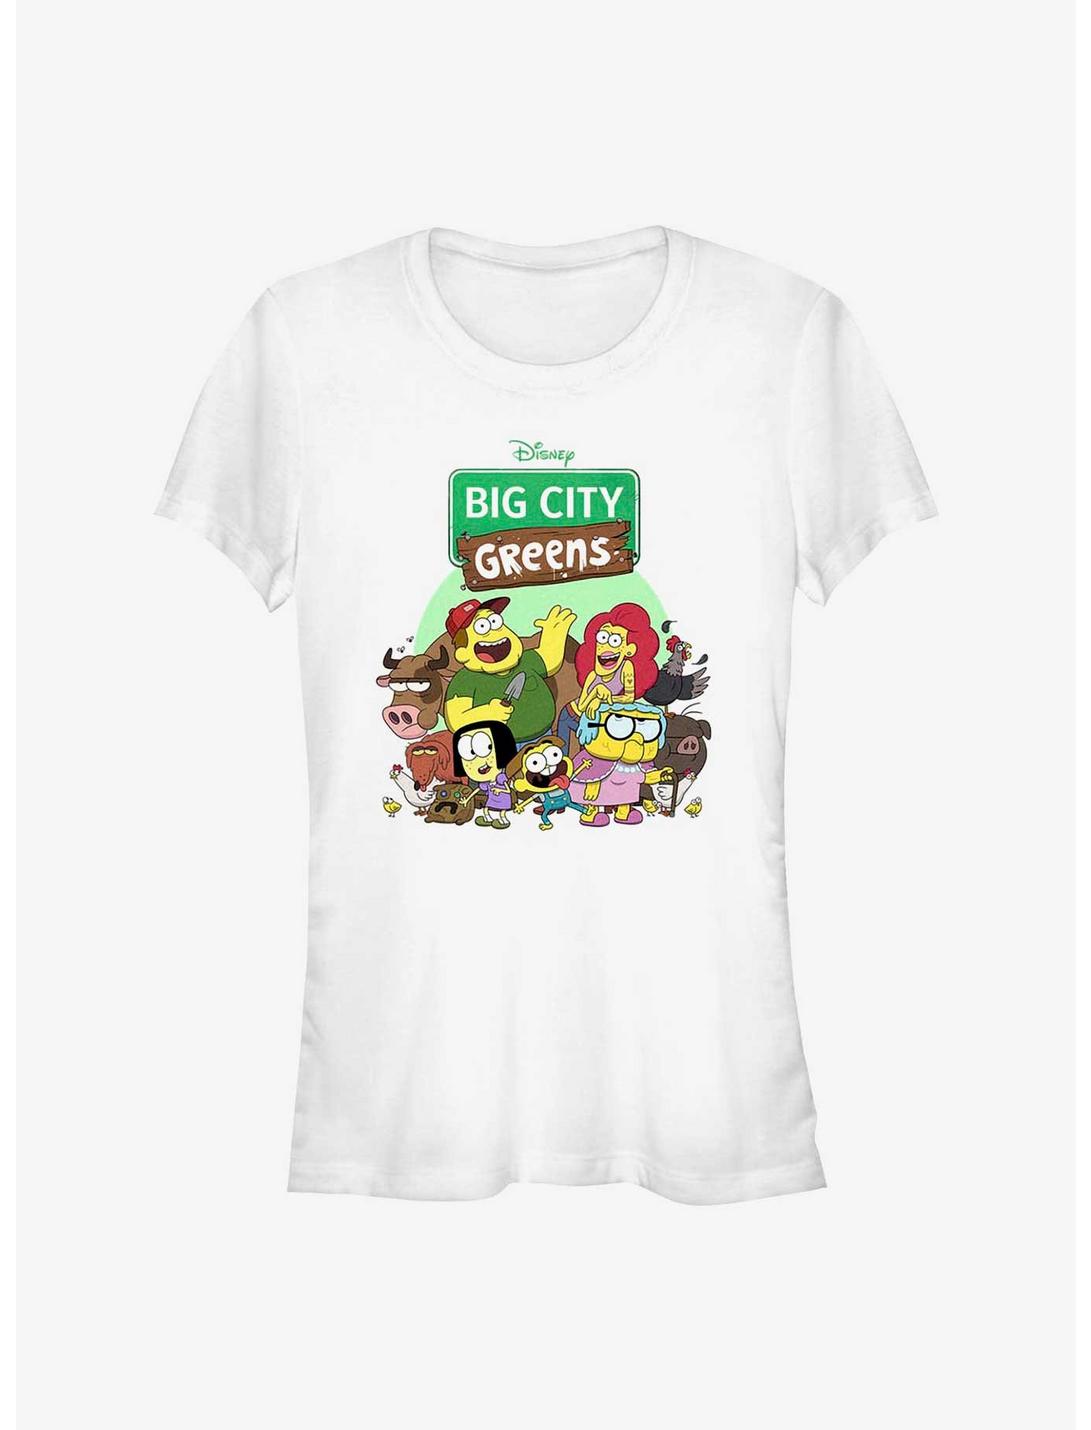 Disney's Big City Greens Group Shot Girls T-Shirt, WHITE, hi-res